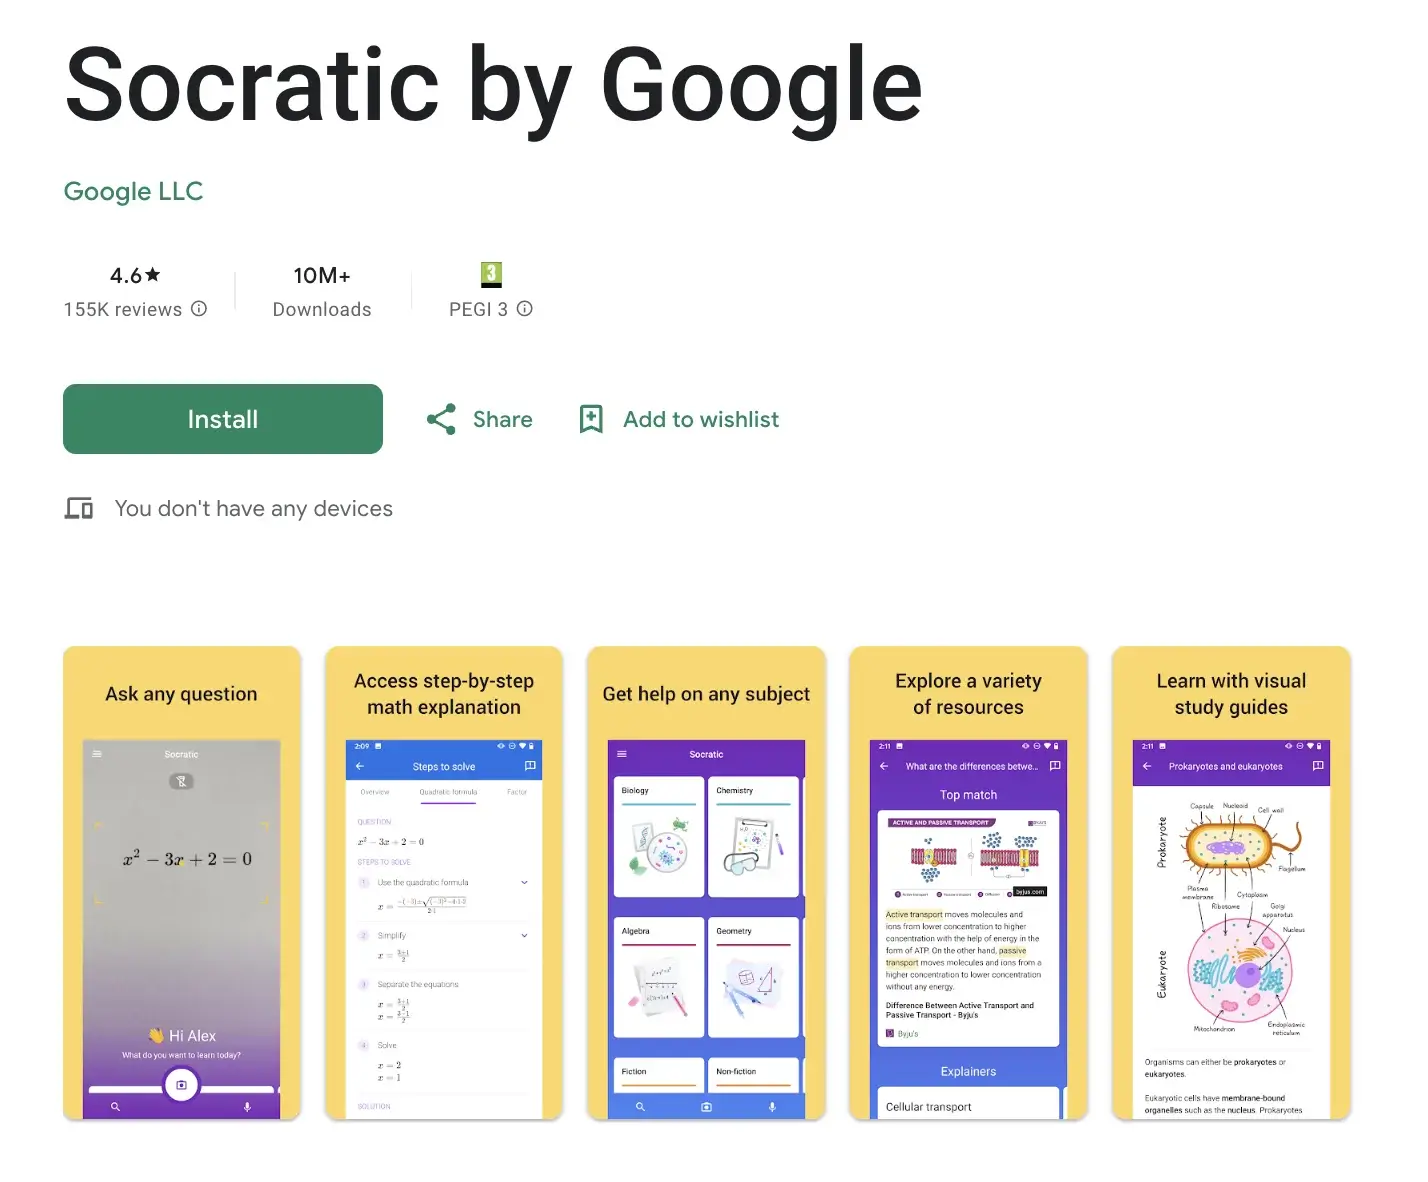 9. Socratic by Google